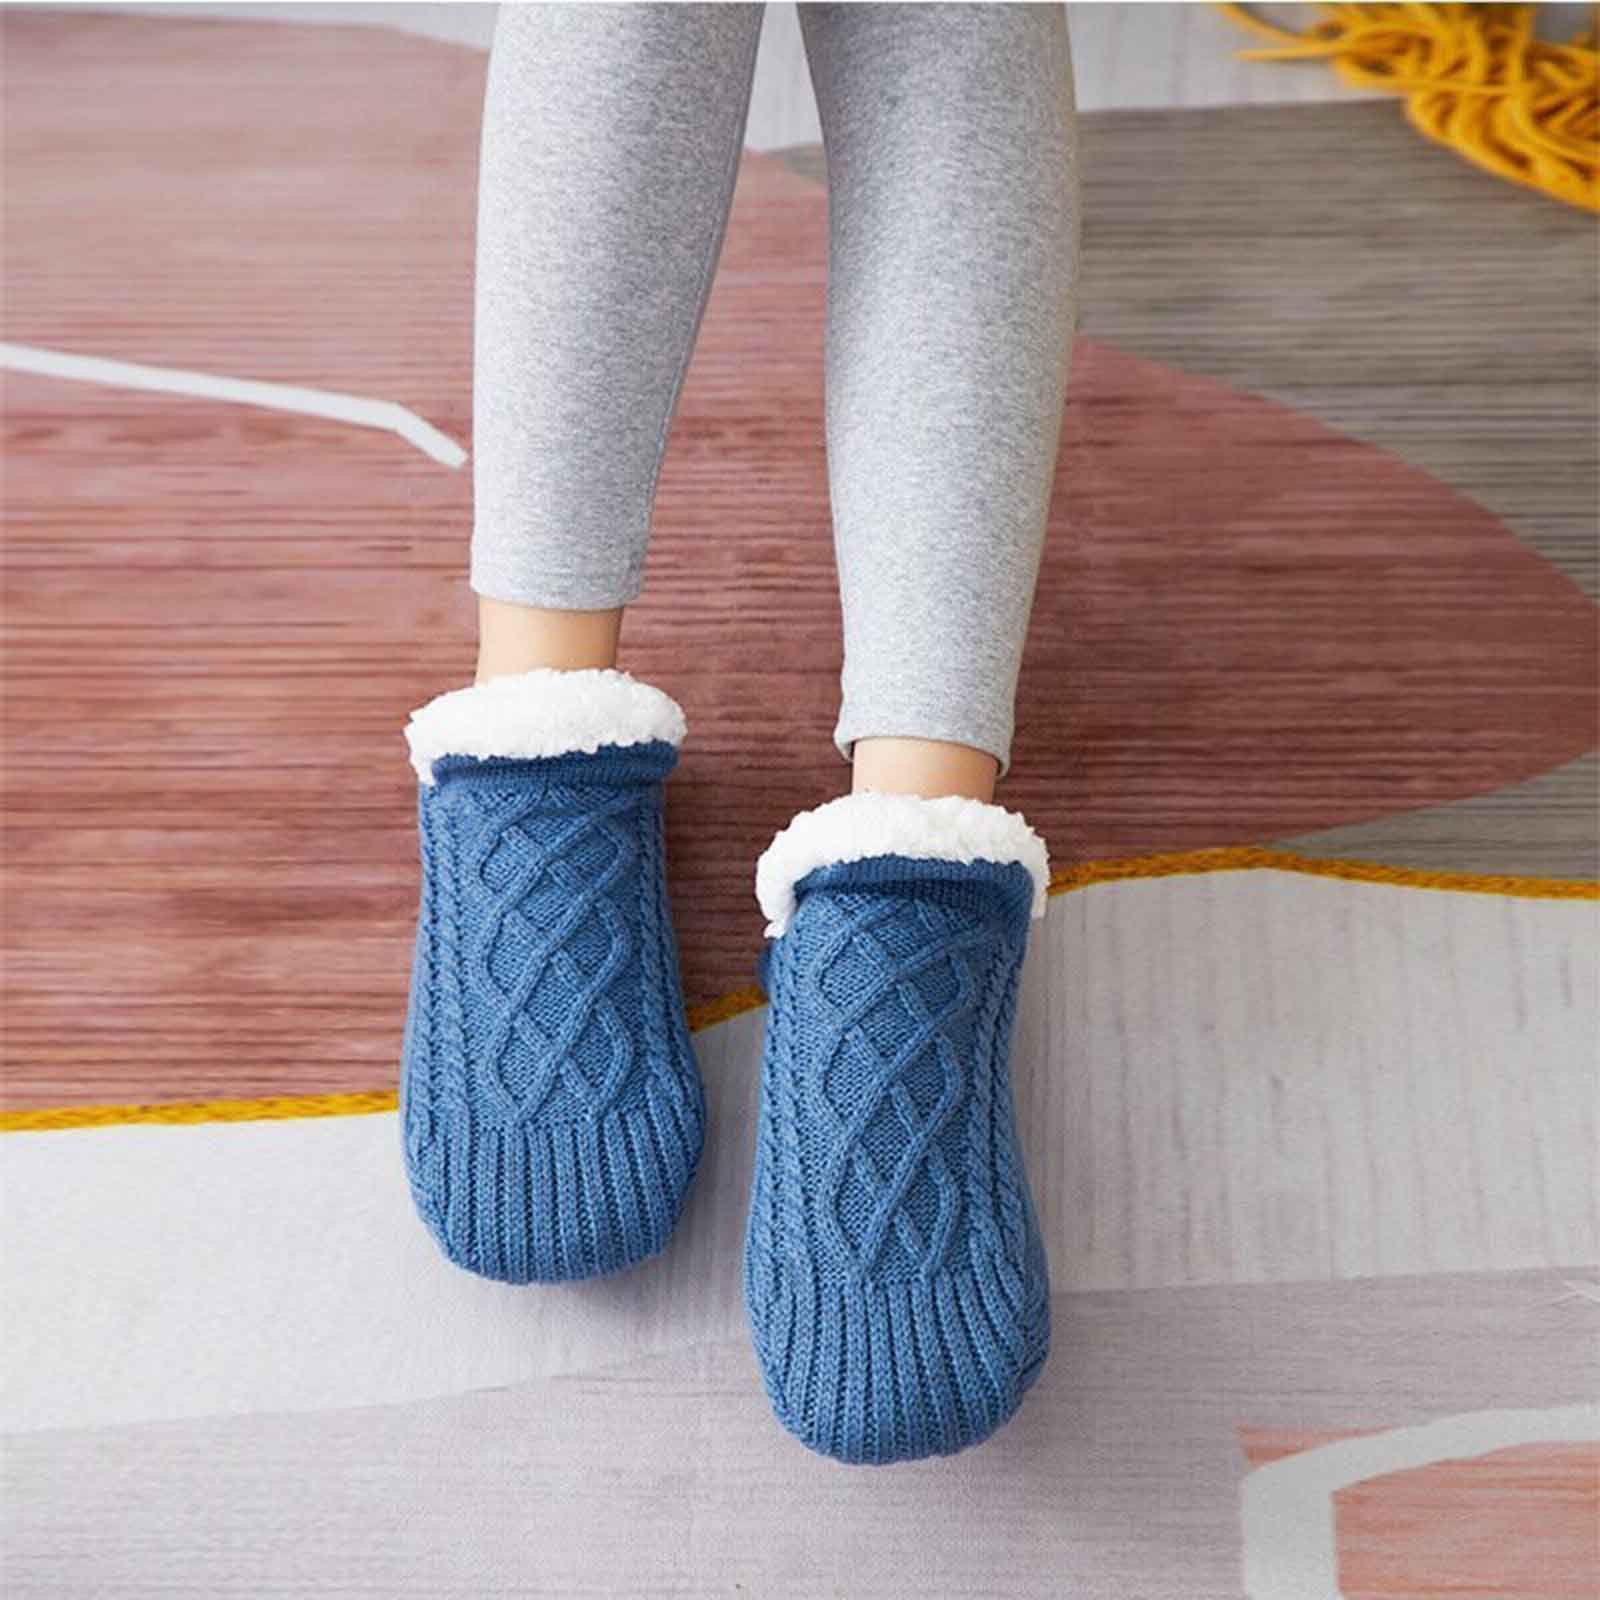 Home Floor Slippers Thermal Socks Women Winter Floor Shoes Non-Slip Indoor Socks Shoes Warm Fur Slides Ladies Plush Slippers